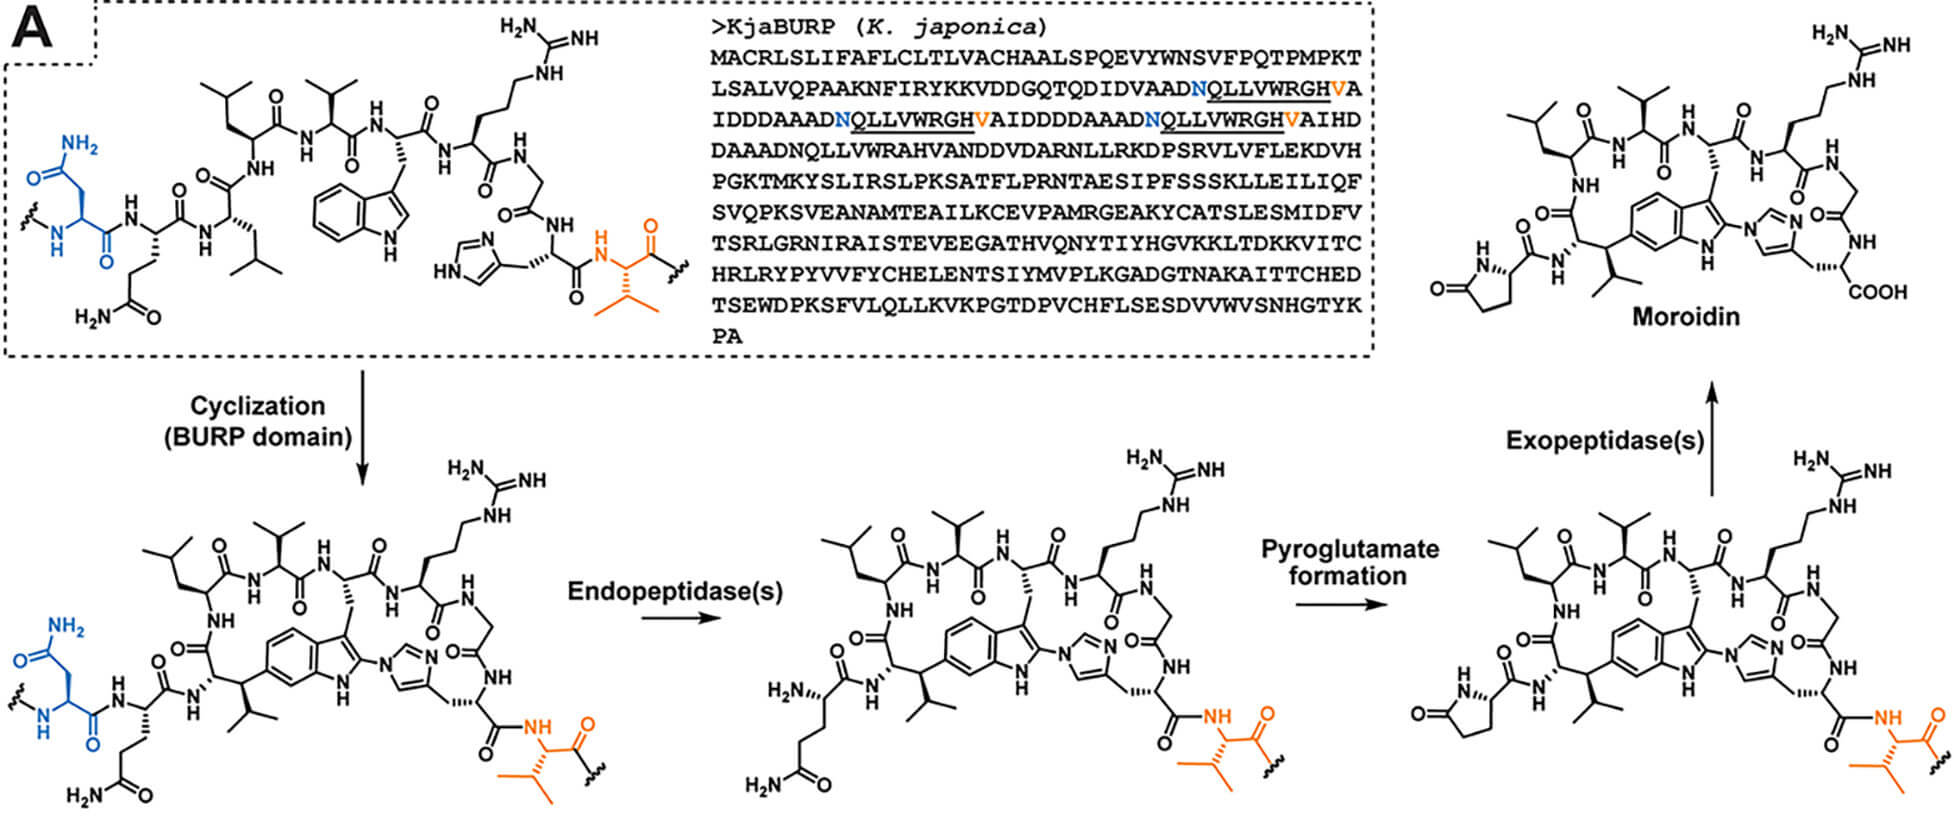 Biosynthetic proposal of moroidin